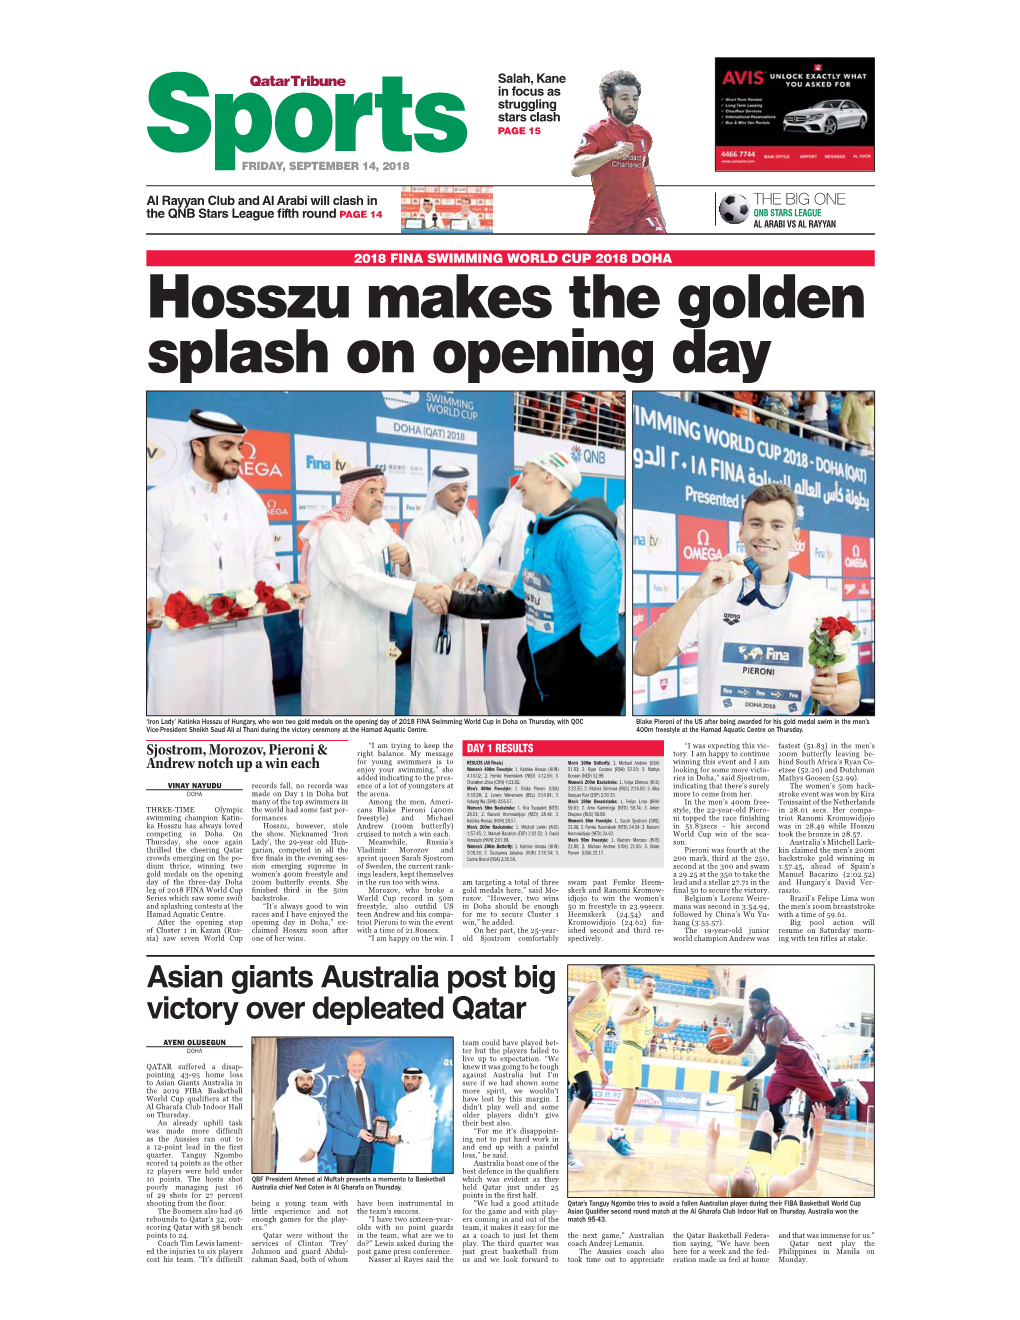 Hosszu Makes the Golden Splash on Opening Day